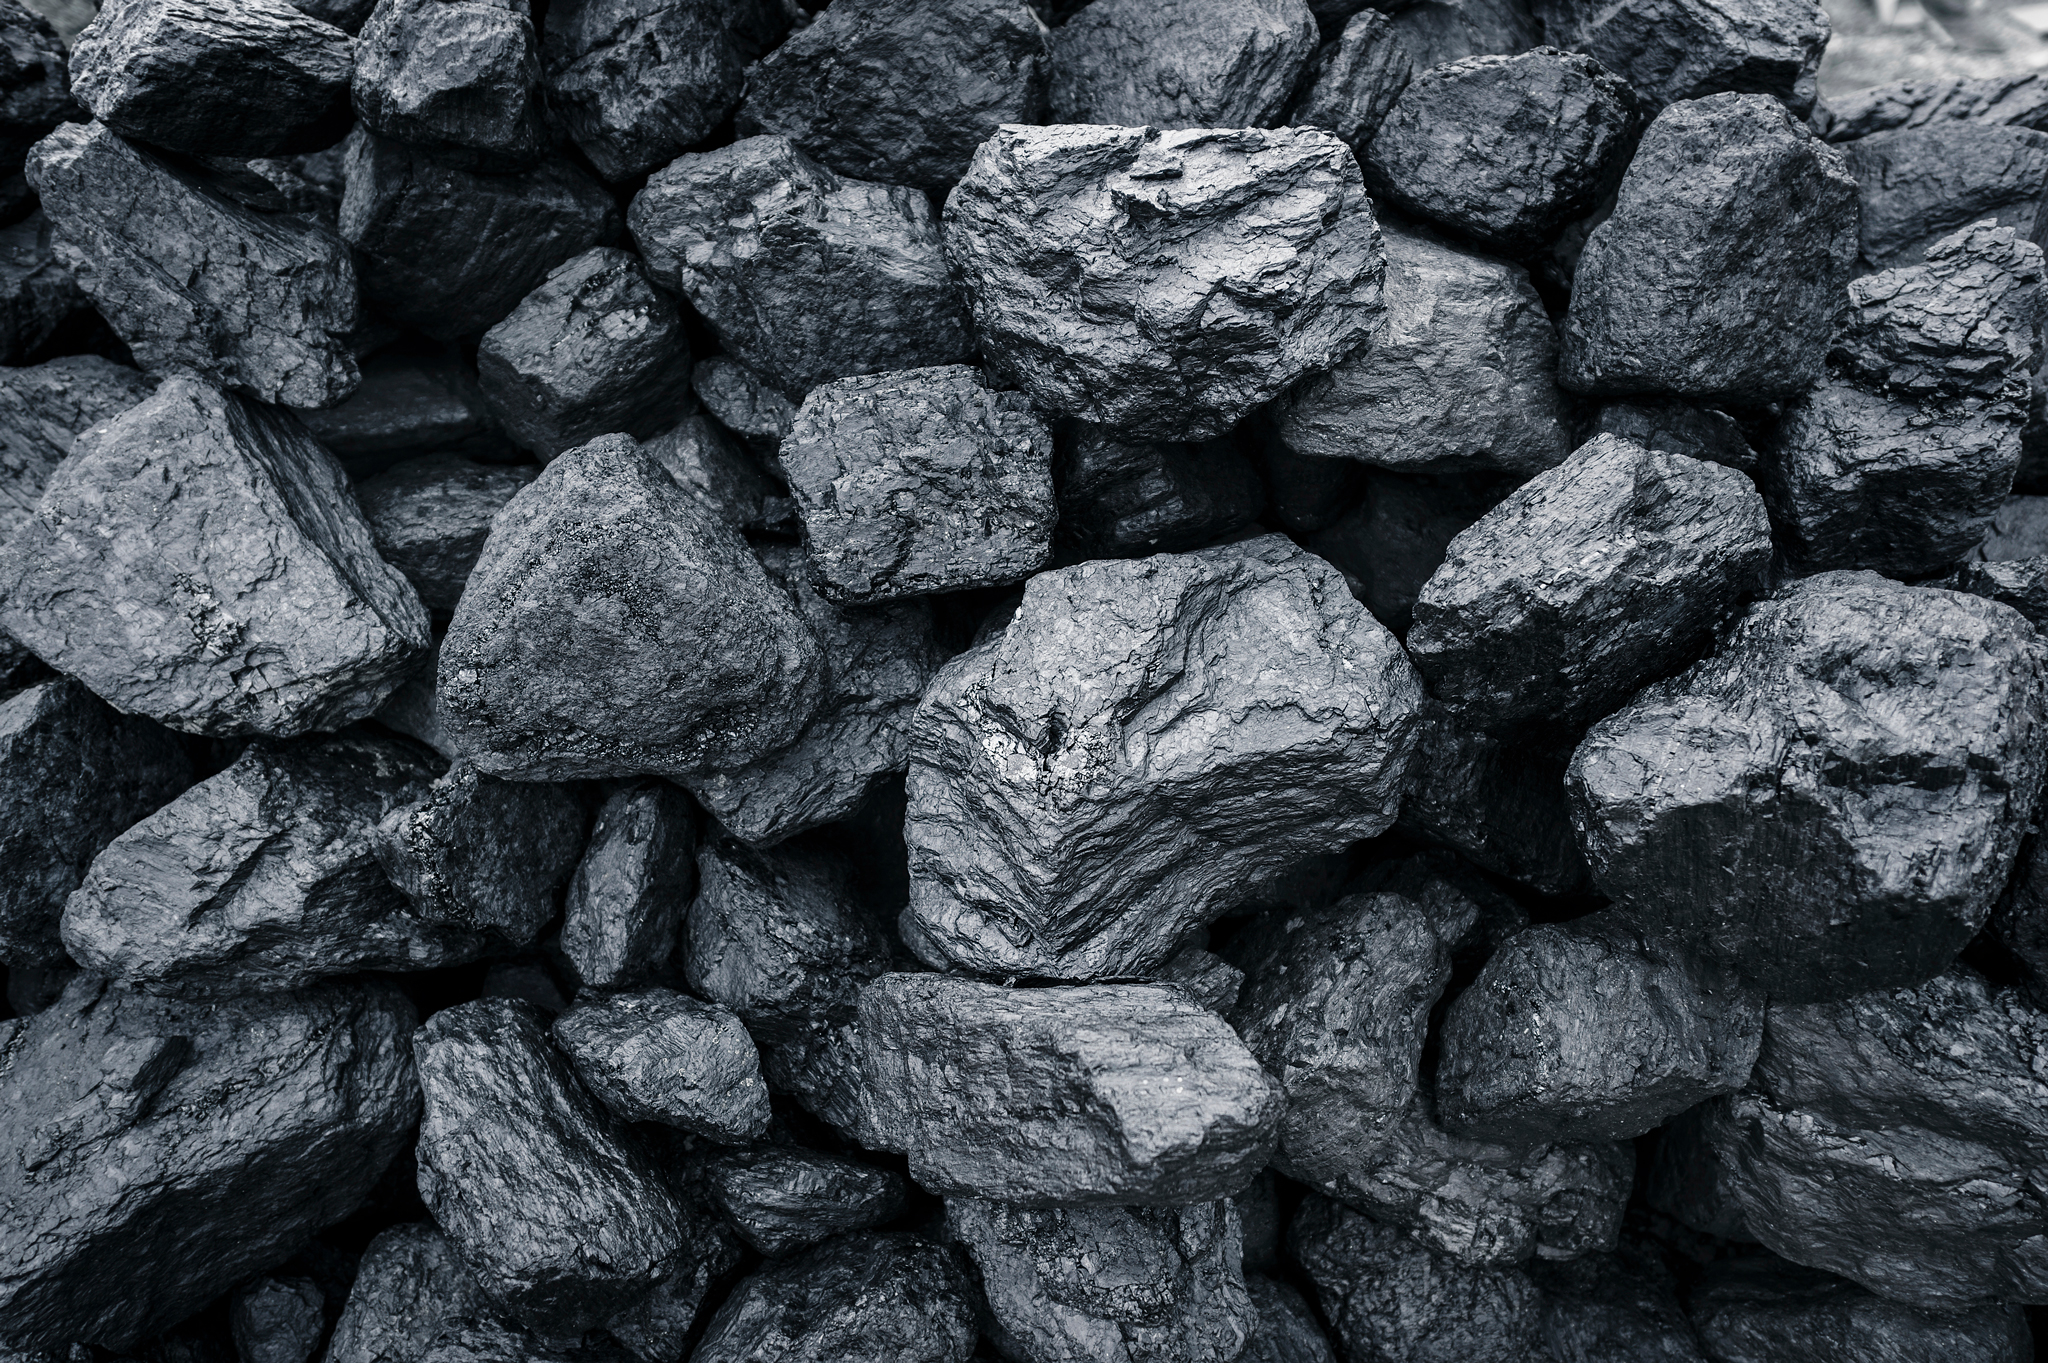 Mound of coal